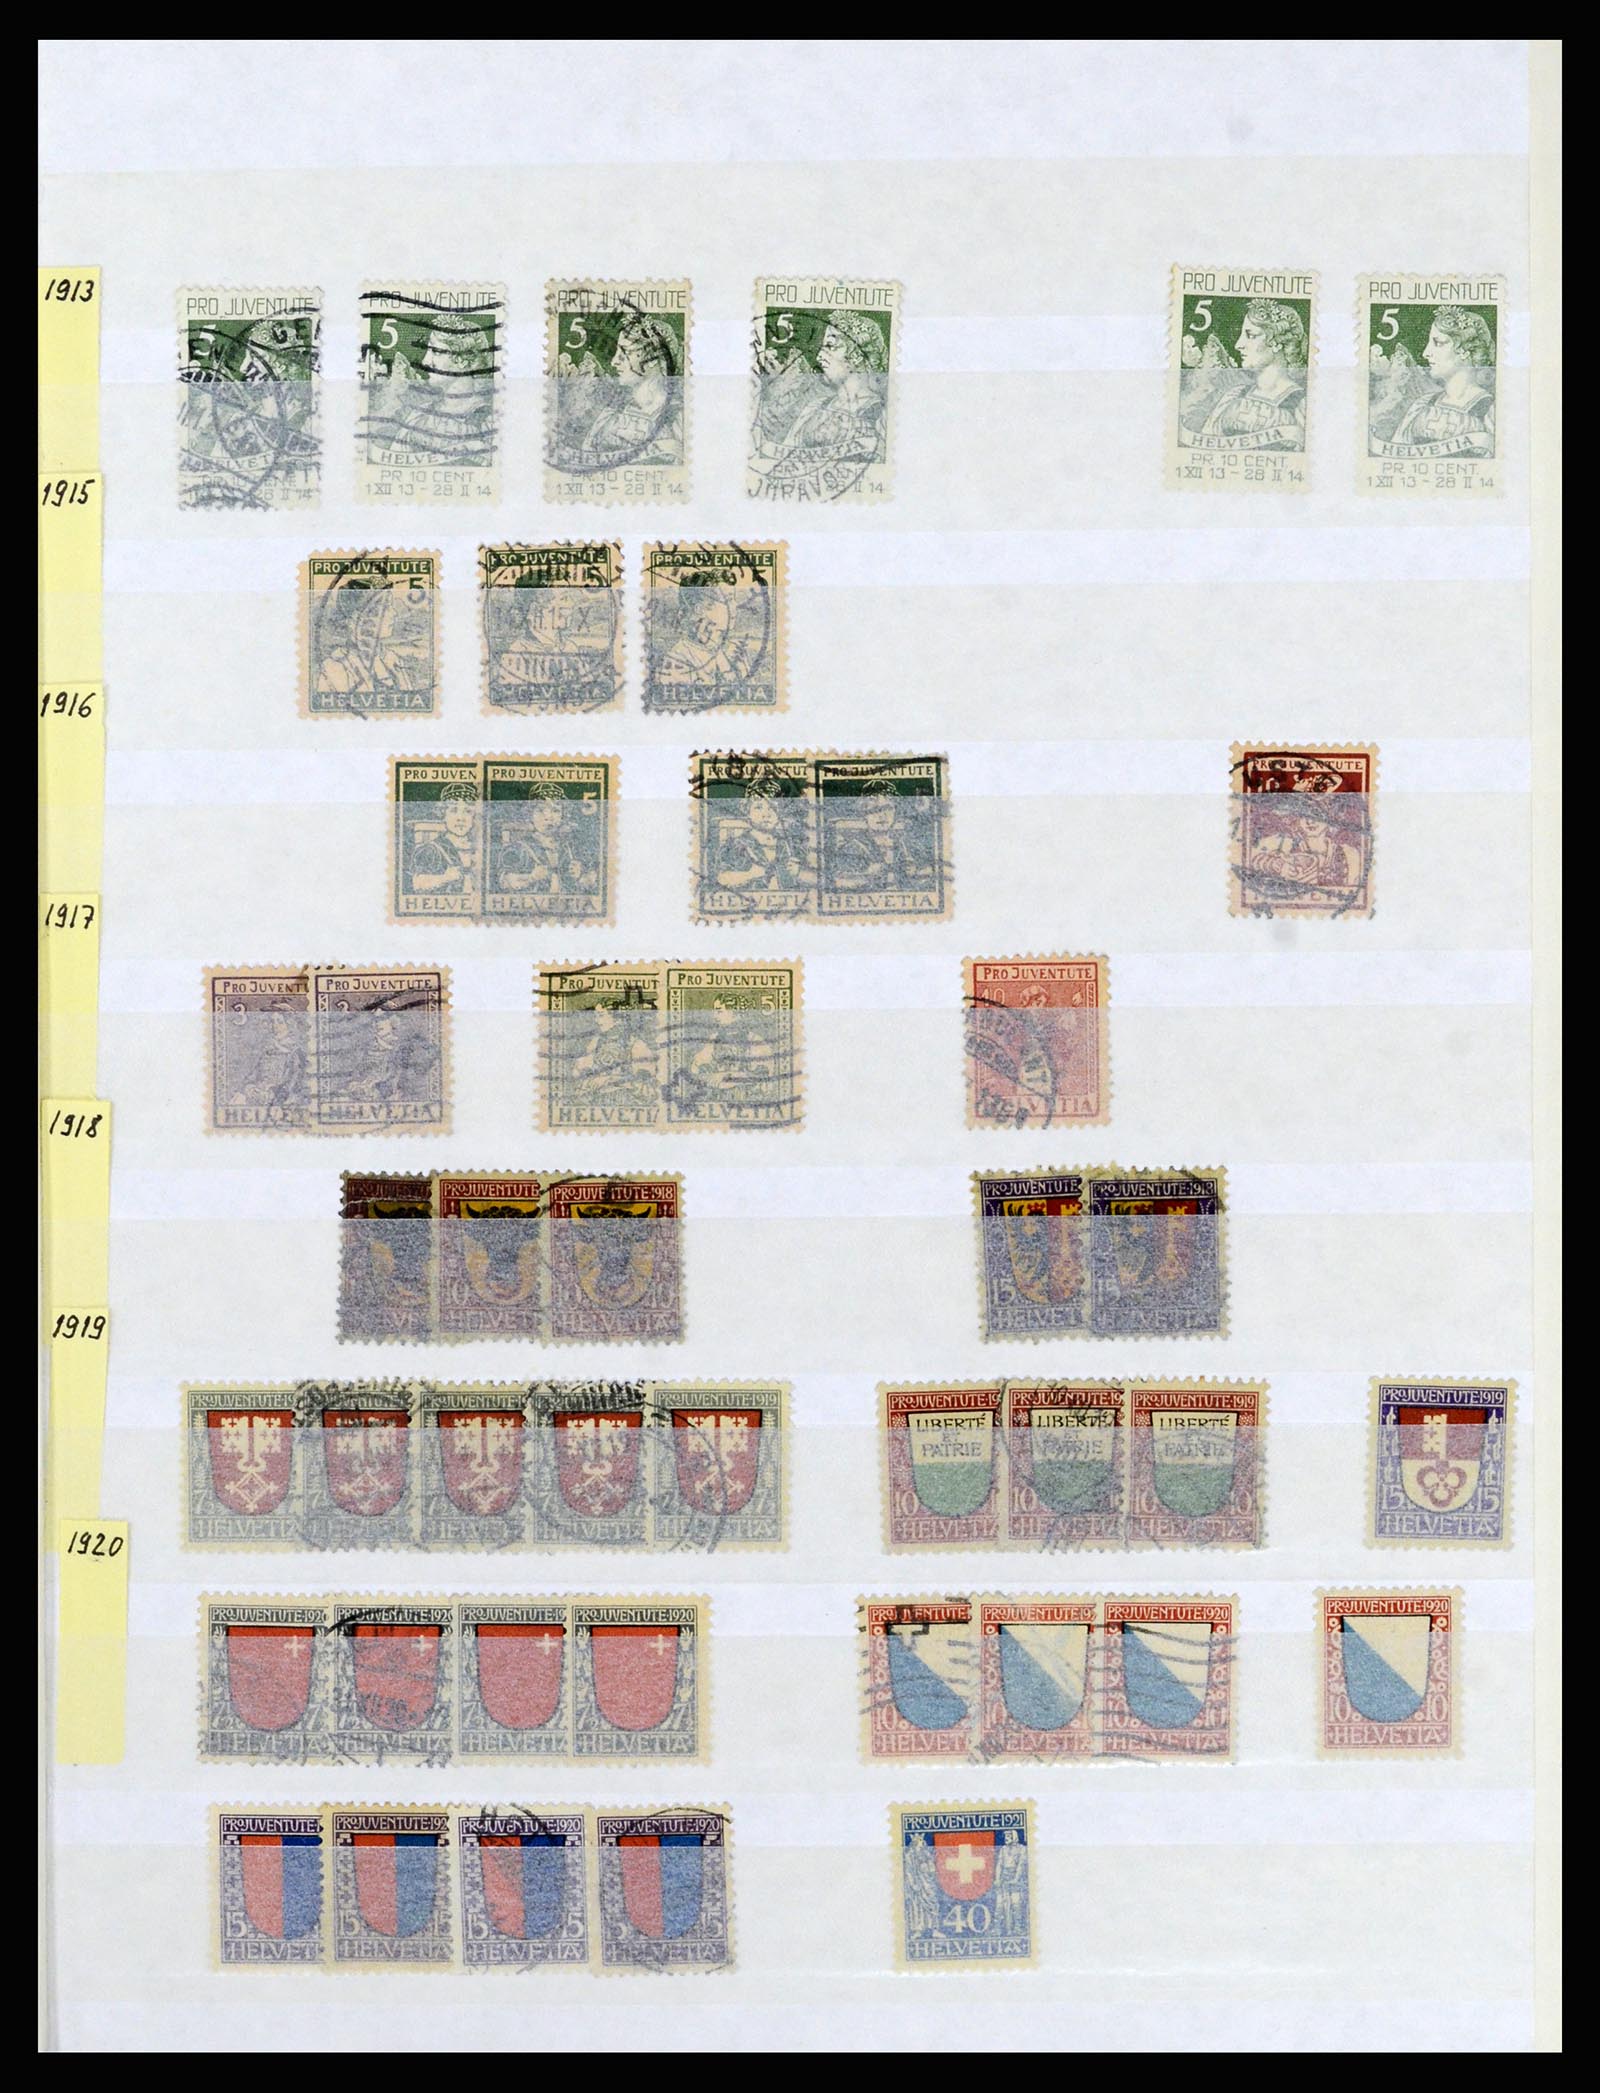 37061 001 - Stamp collection 37061 Switzerland 1913-2000.